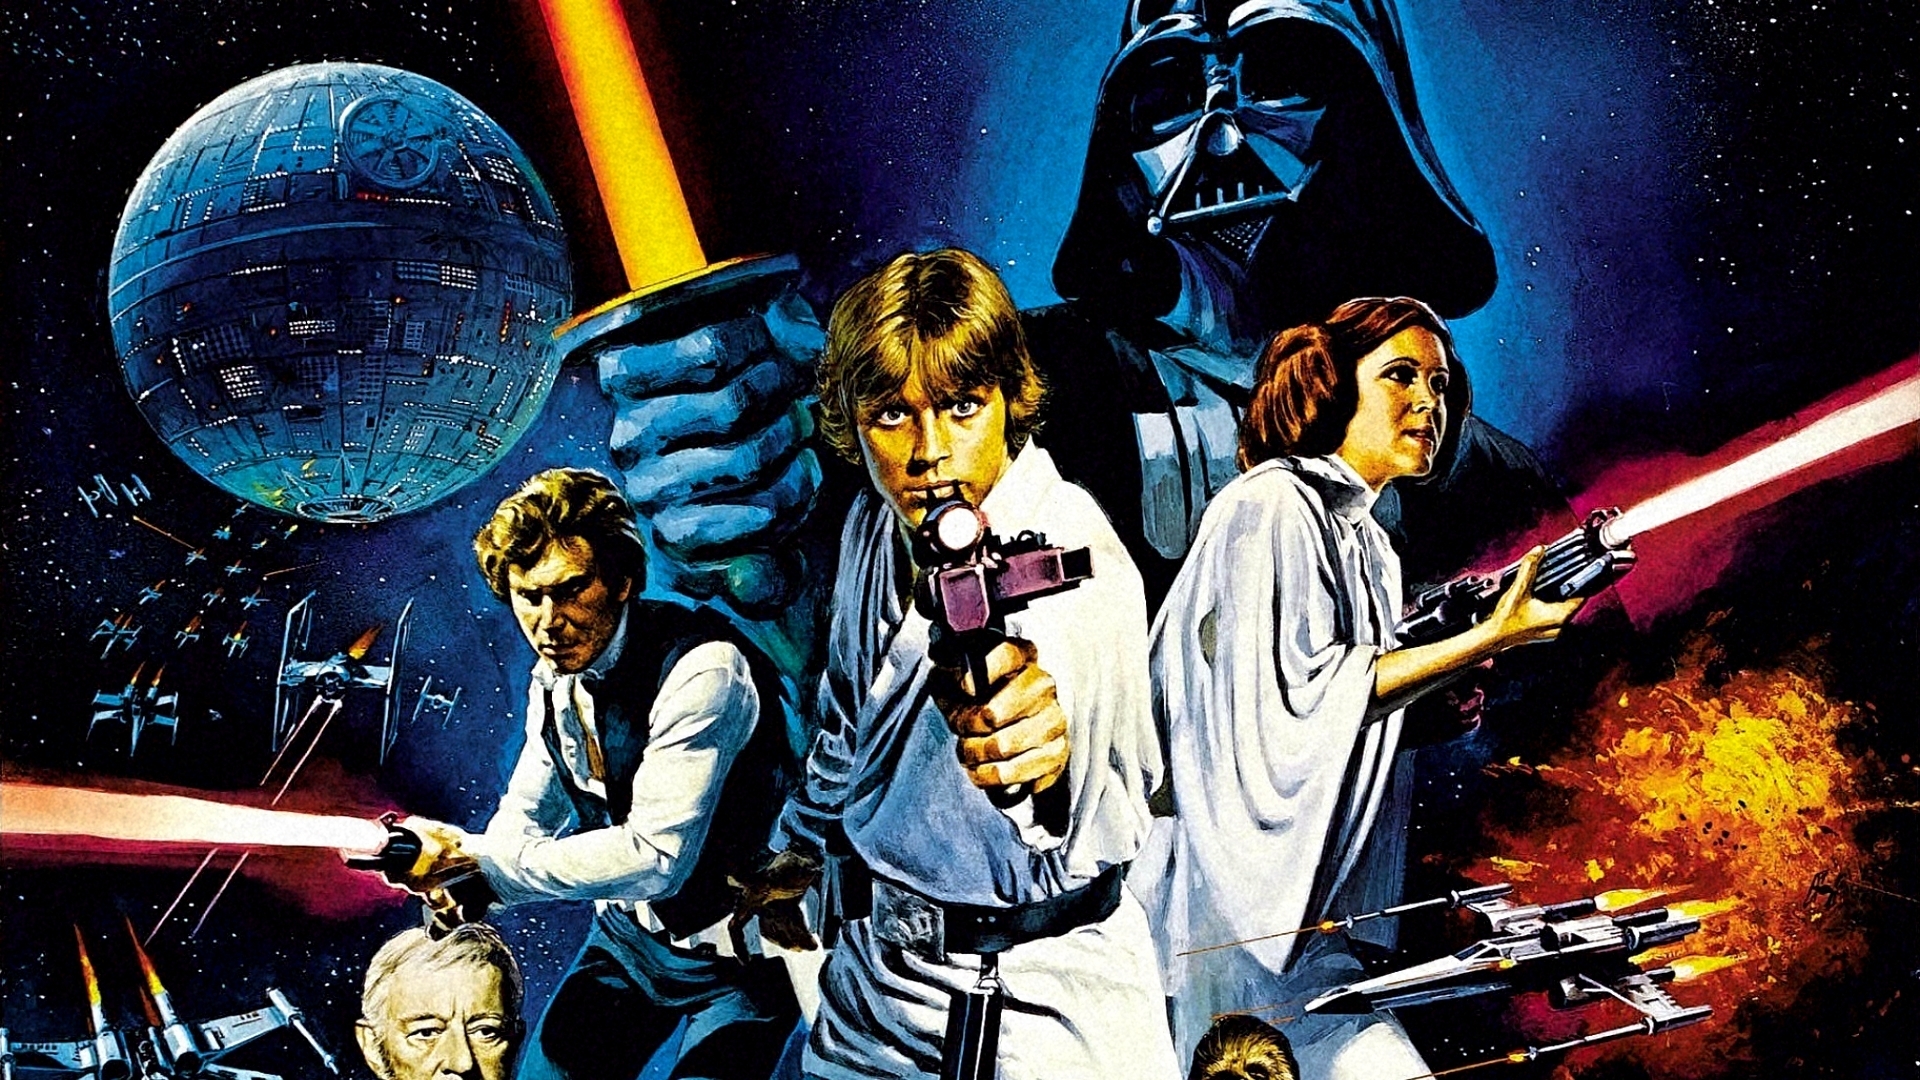 Darth Vader Death Star Han Solo Luke Skywalker Princess Leia Wallpaper:1920x1080